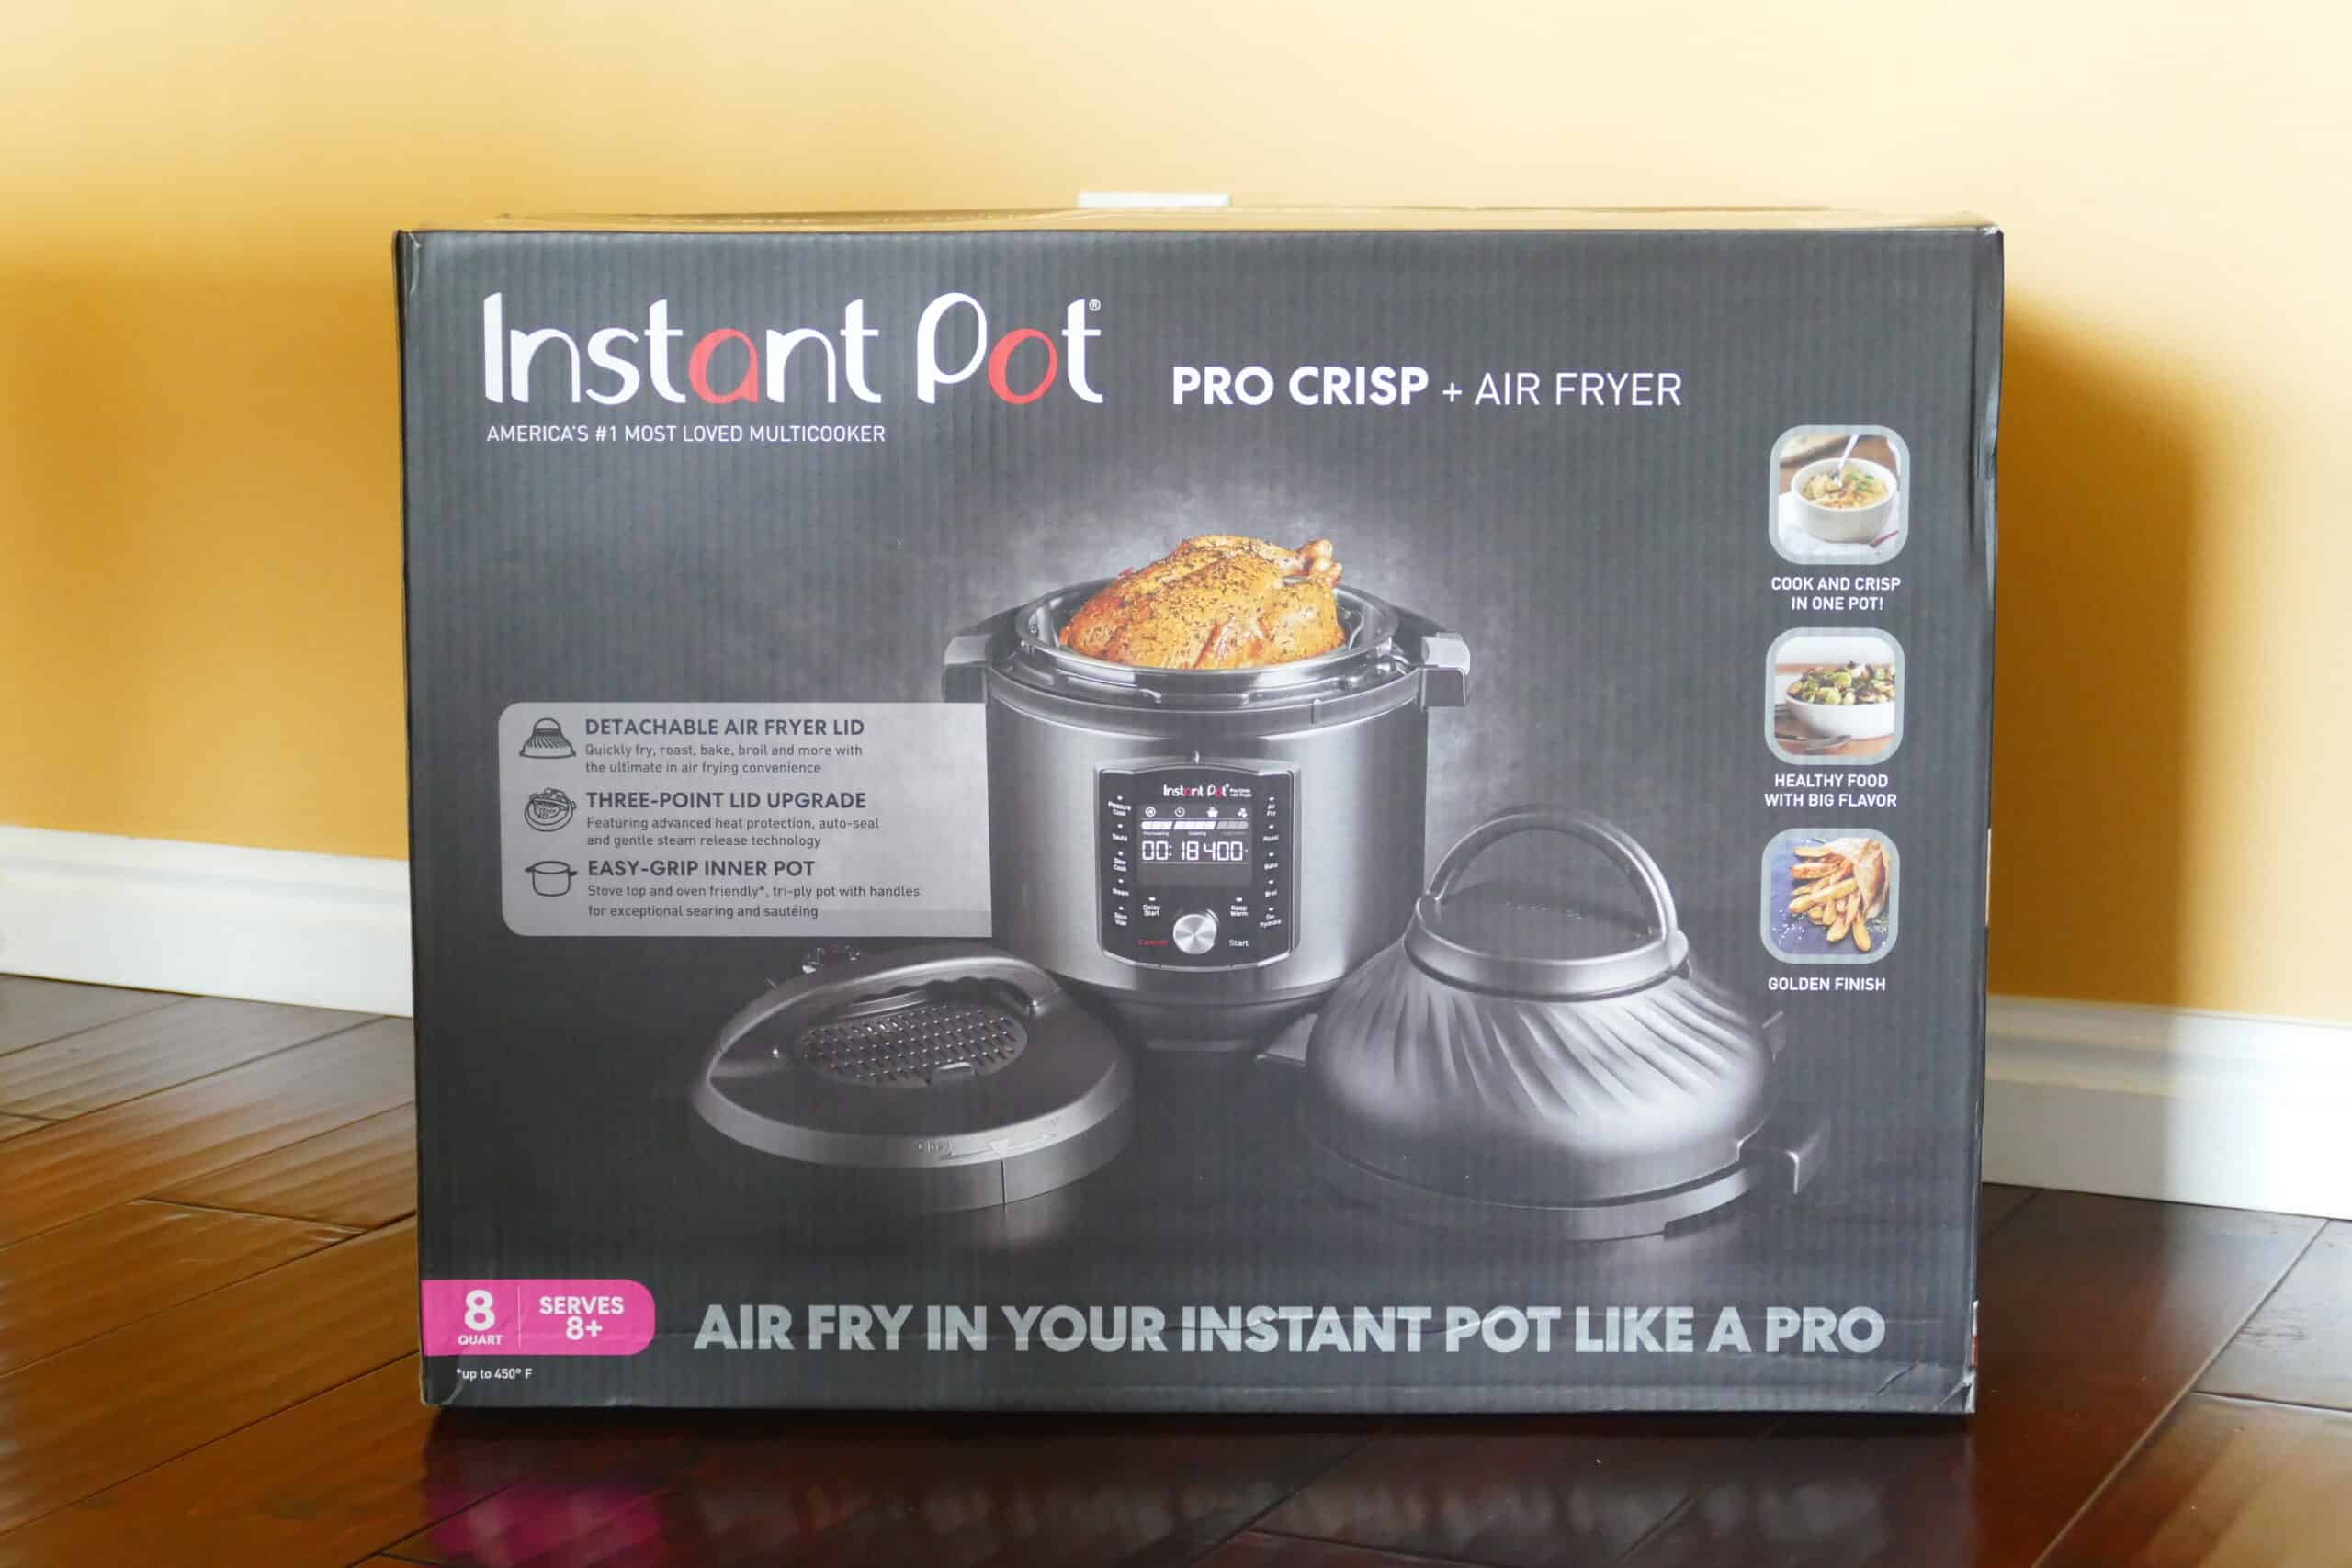 Instant Pot Pro Crisp plus air fryer in a box on the floor